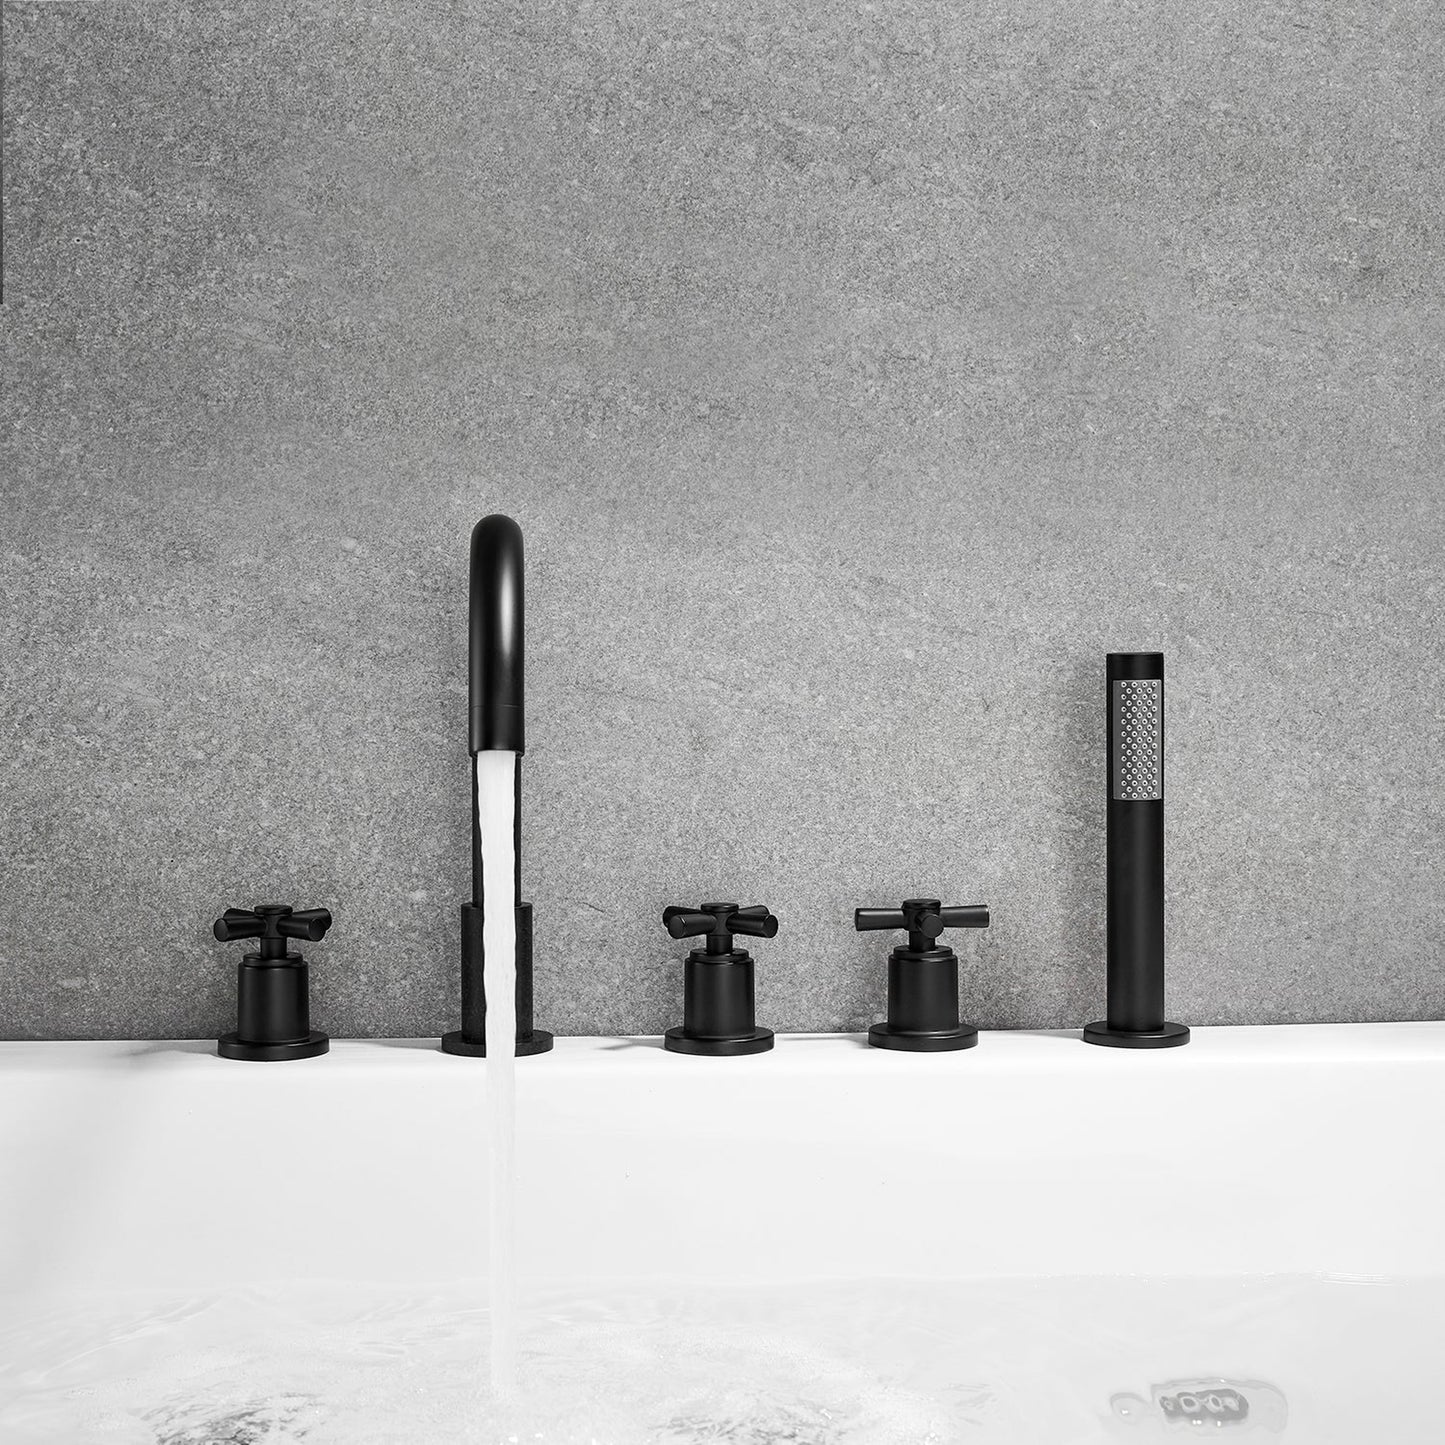 Altair Sorlia Matte Black Cross Handles Deck-mounted Bathtub Faucet With Handshower